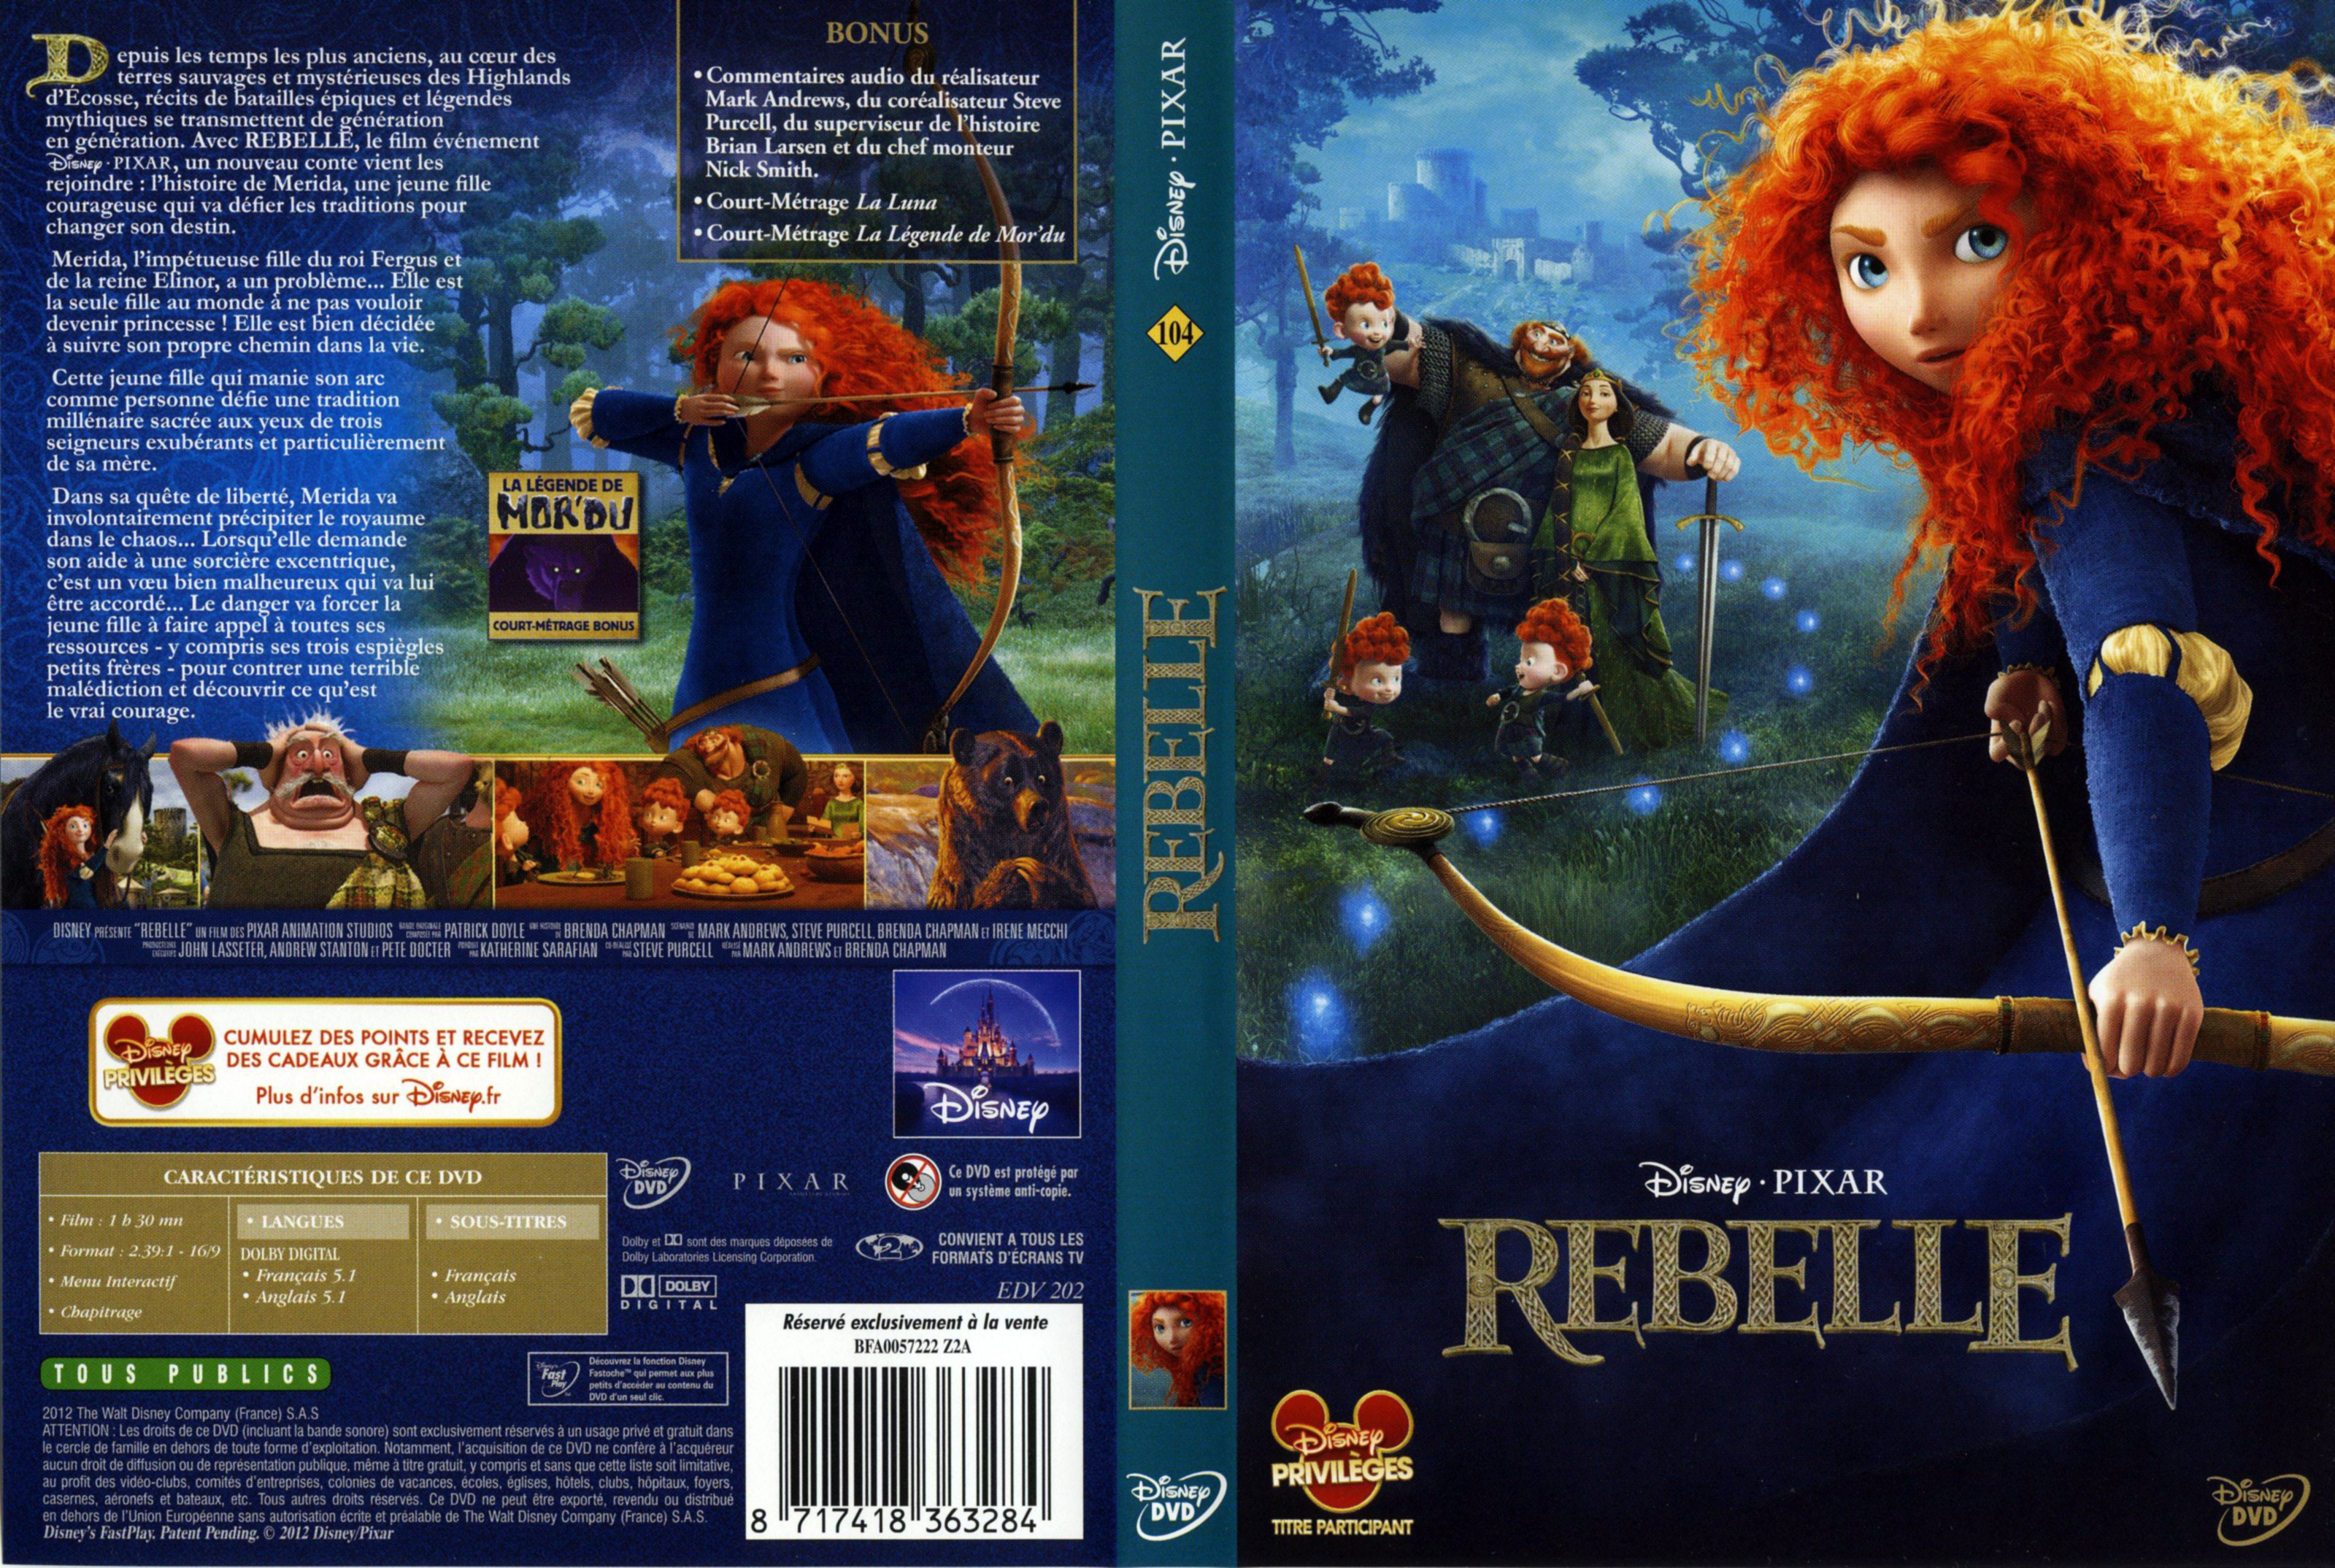 Jaquette DVD Rebelle